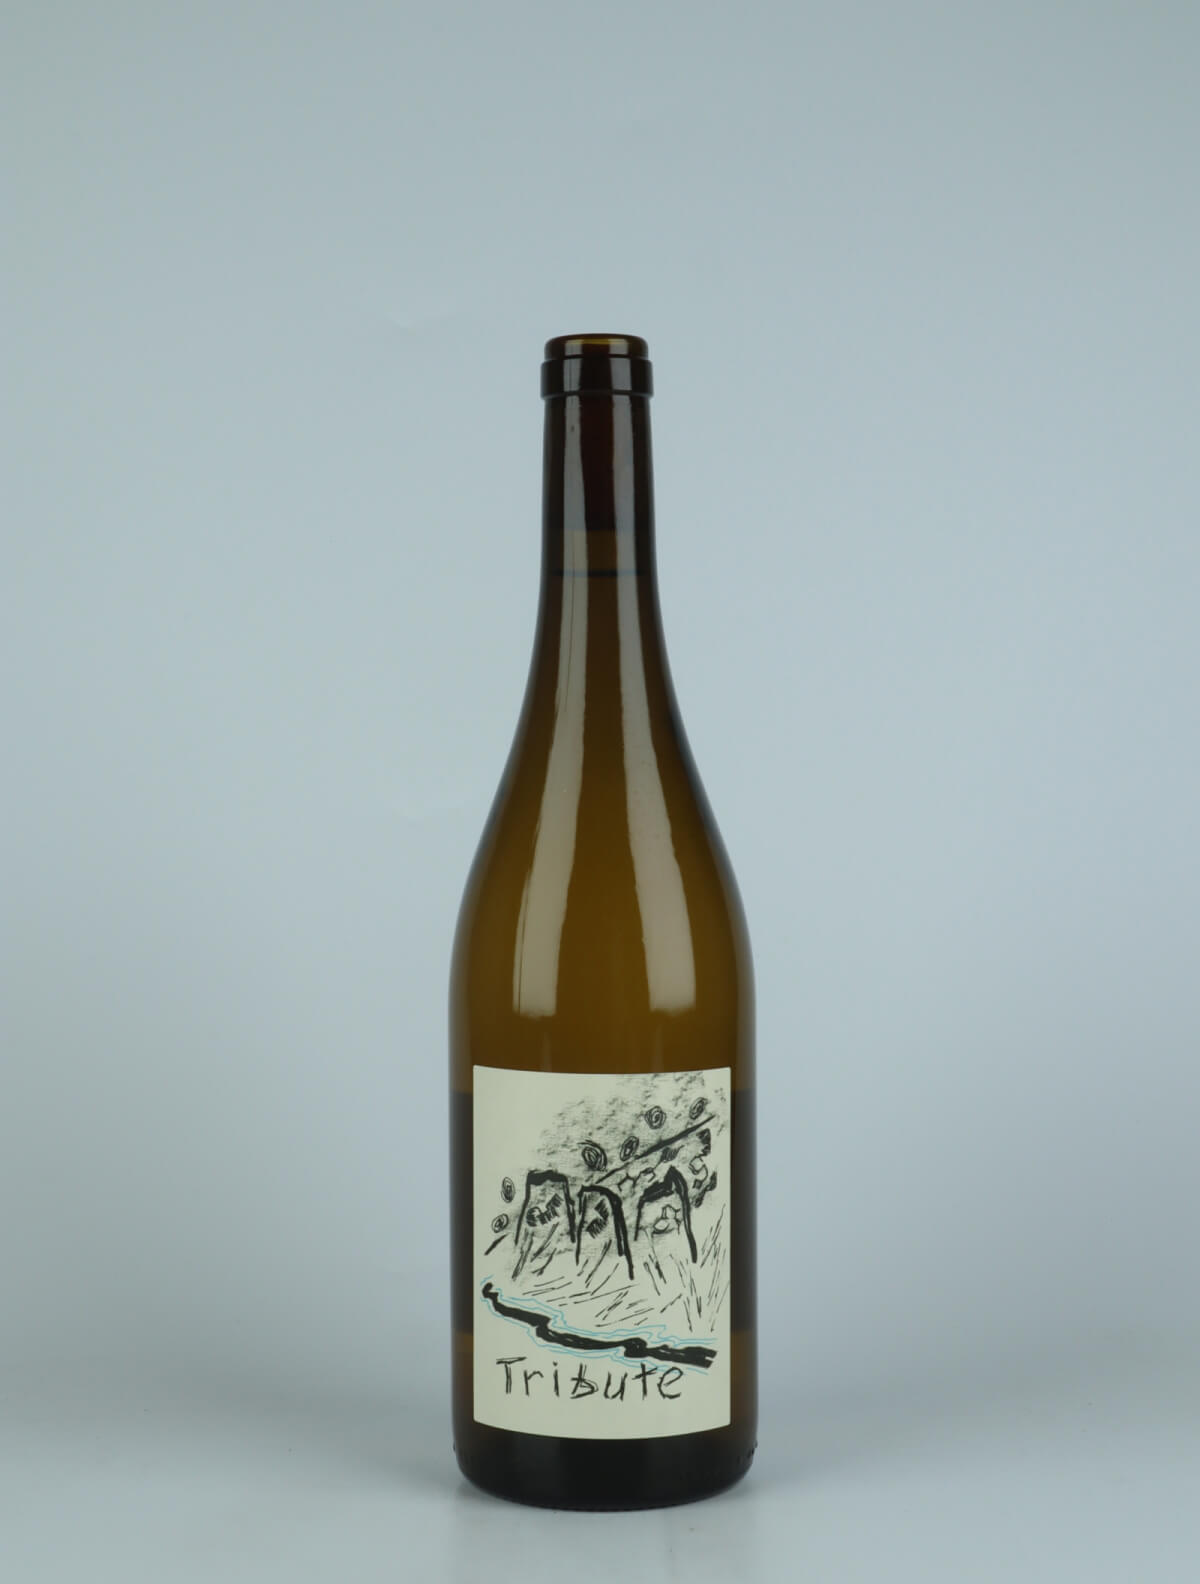 A bottle 2020 Tribute White wine from Complémen'terre, Loire in France